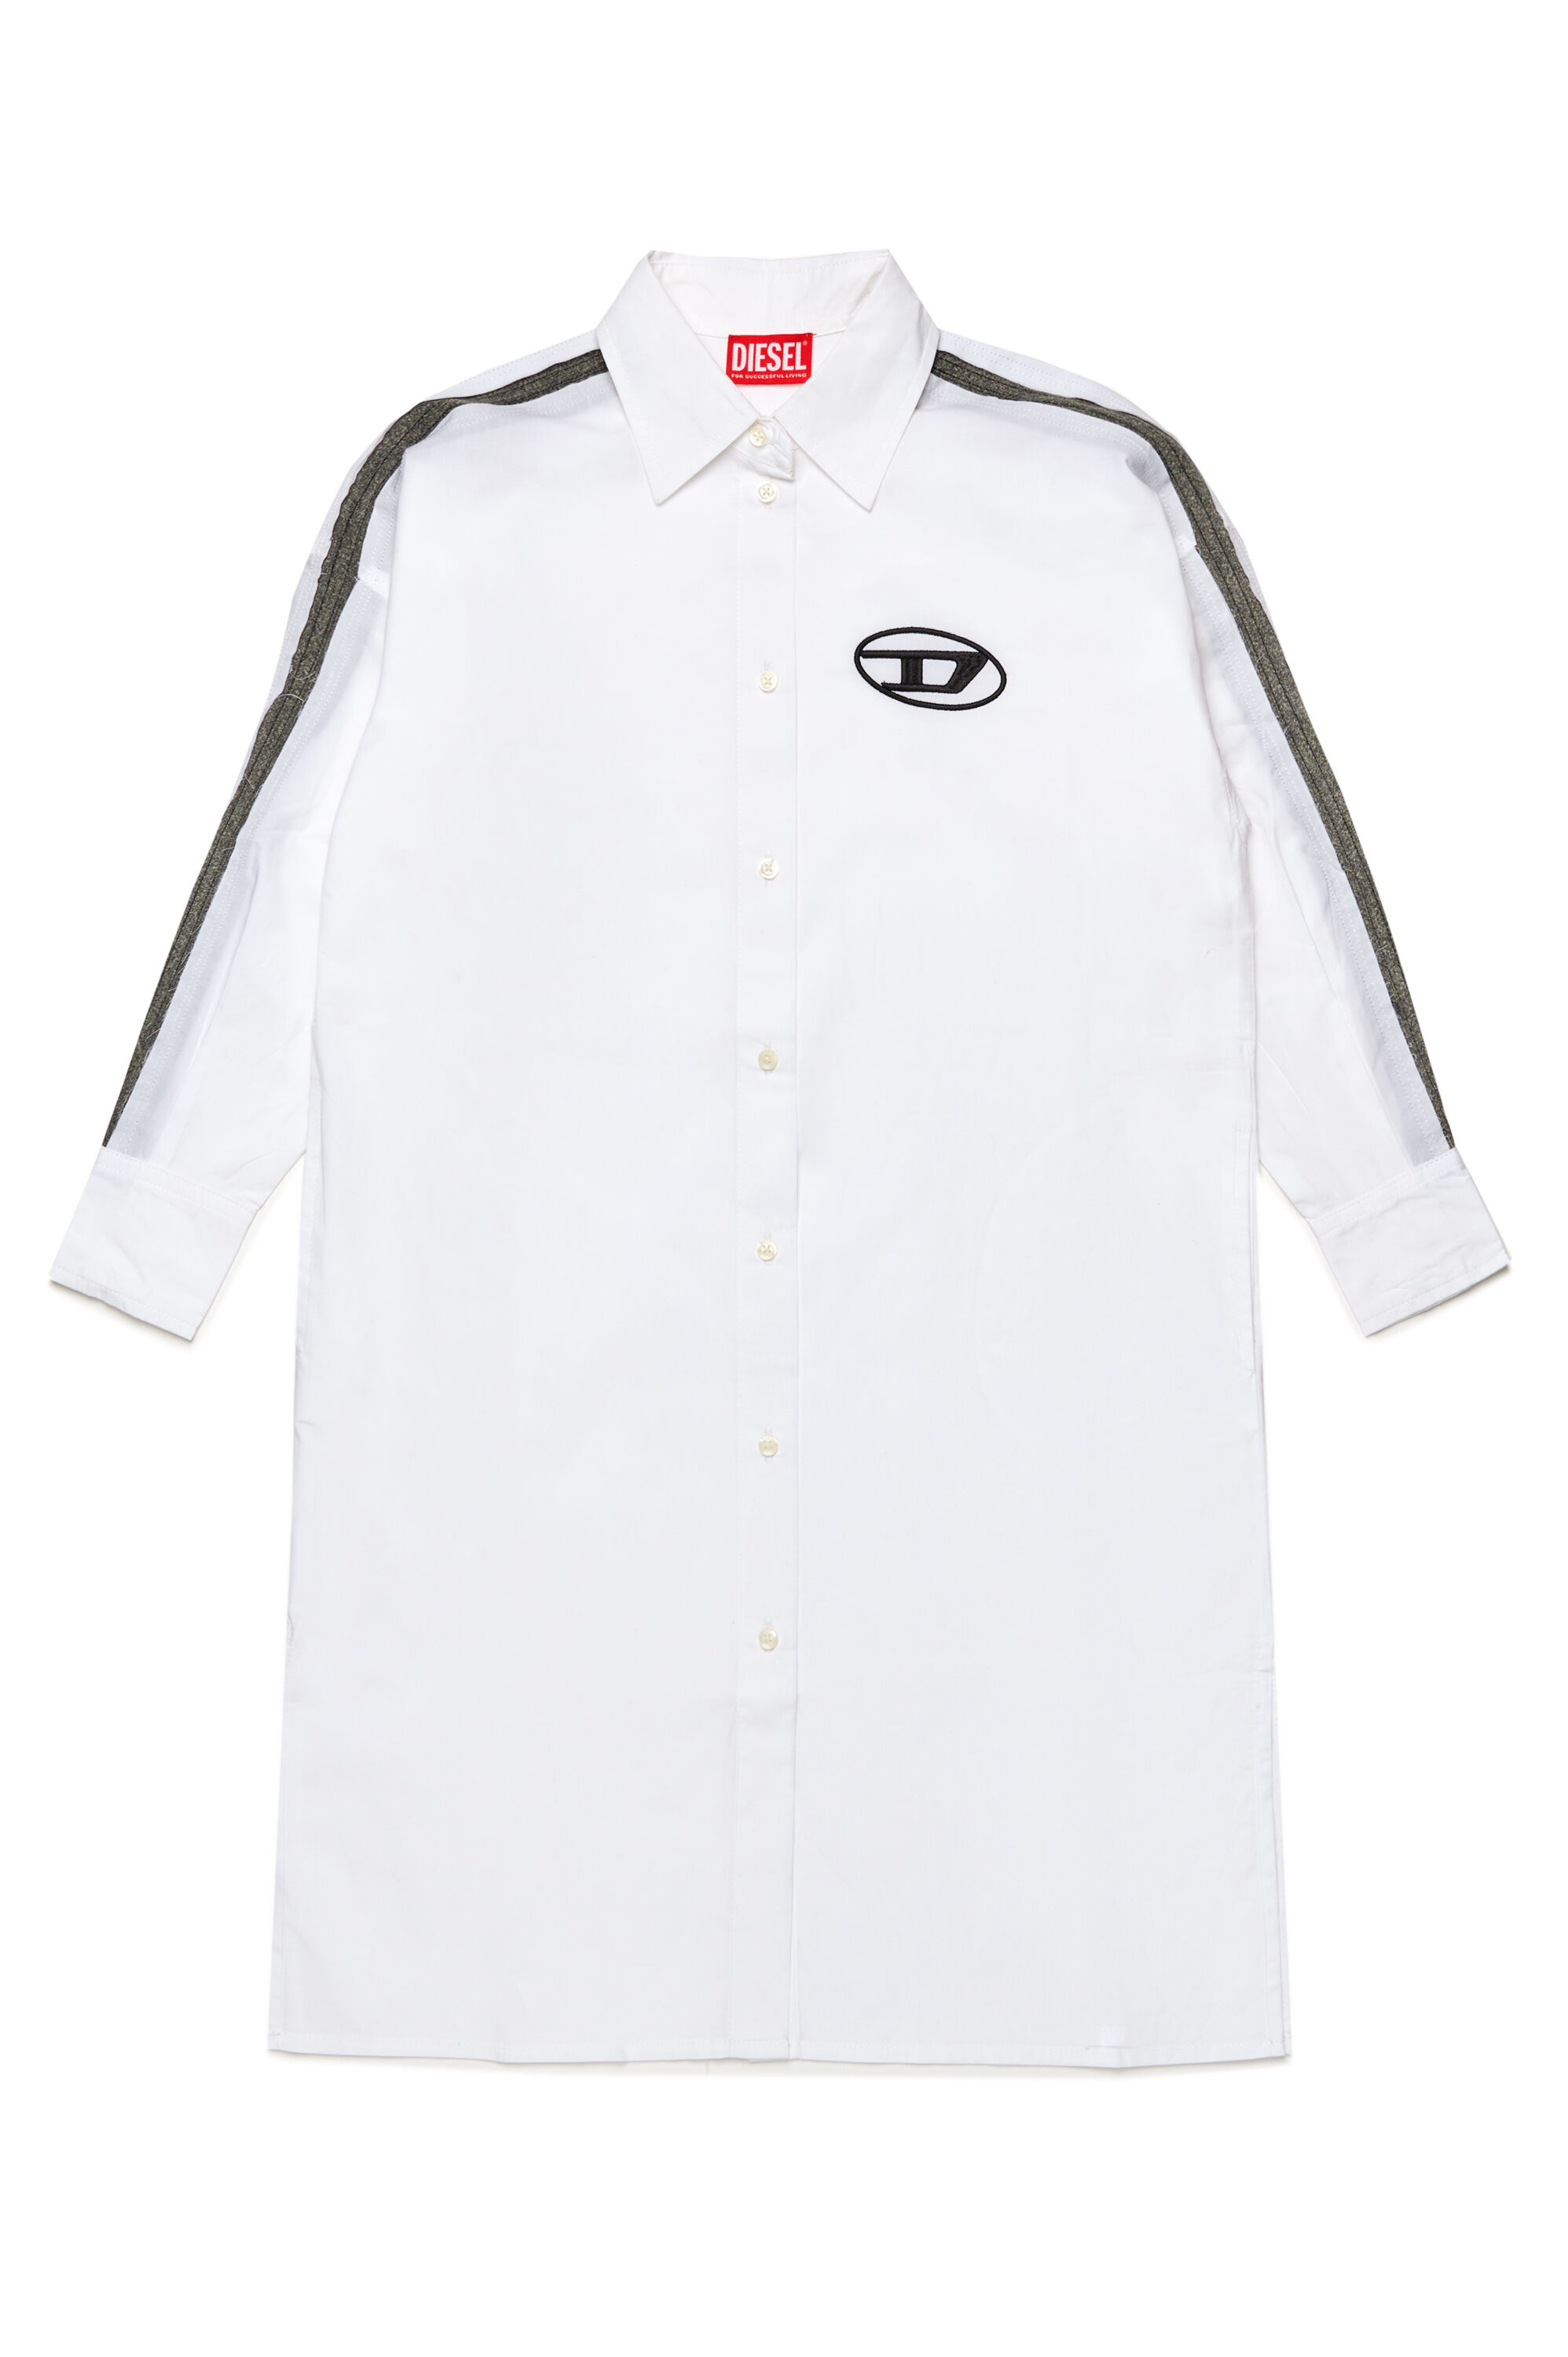 Diesel - DLUN, Femme Robe chemise avec bandes en denim in Blanc - Image 1